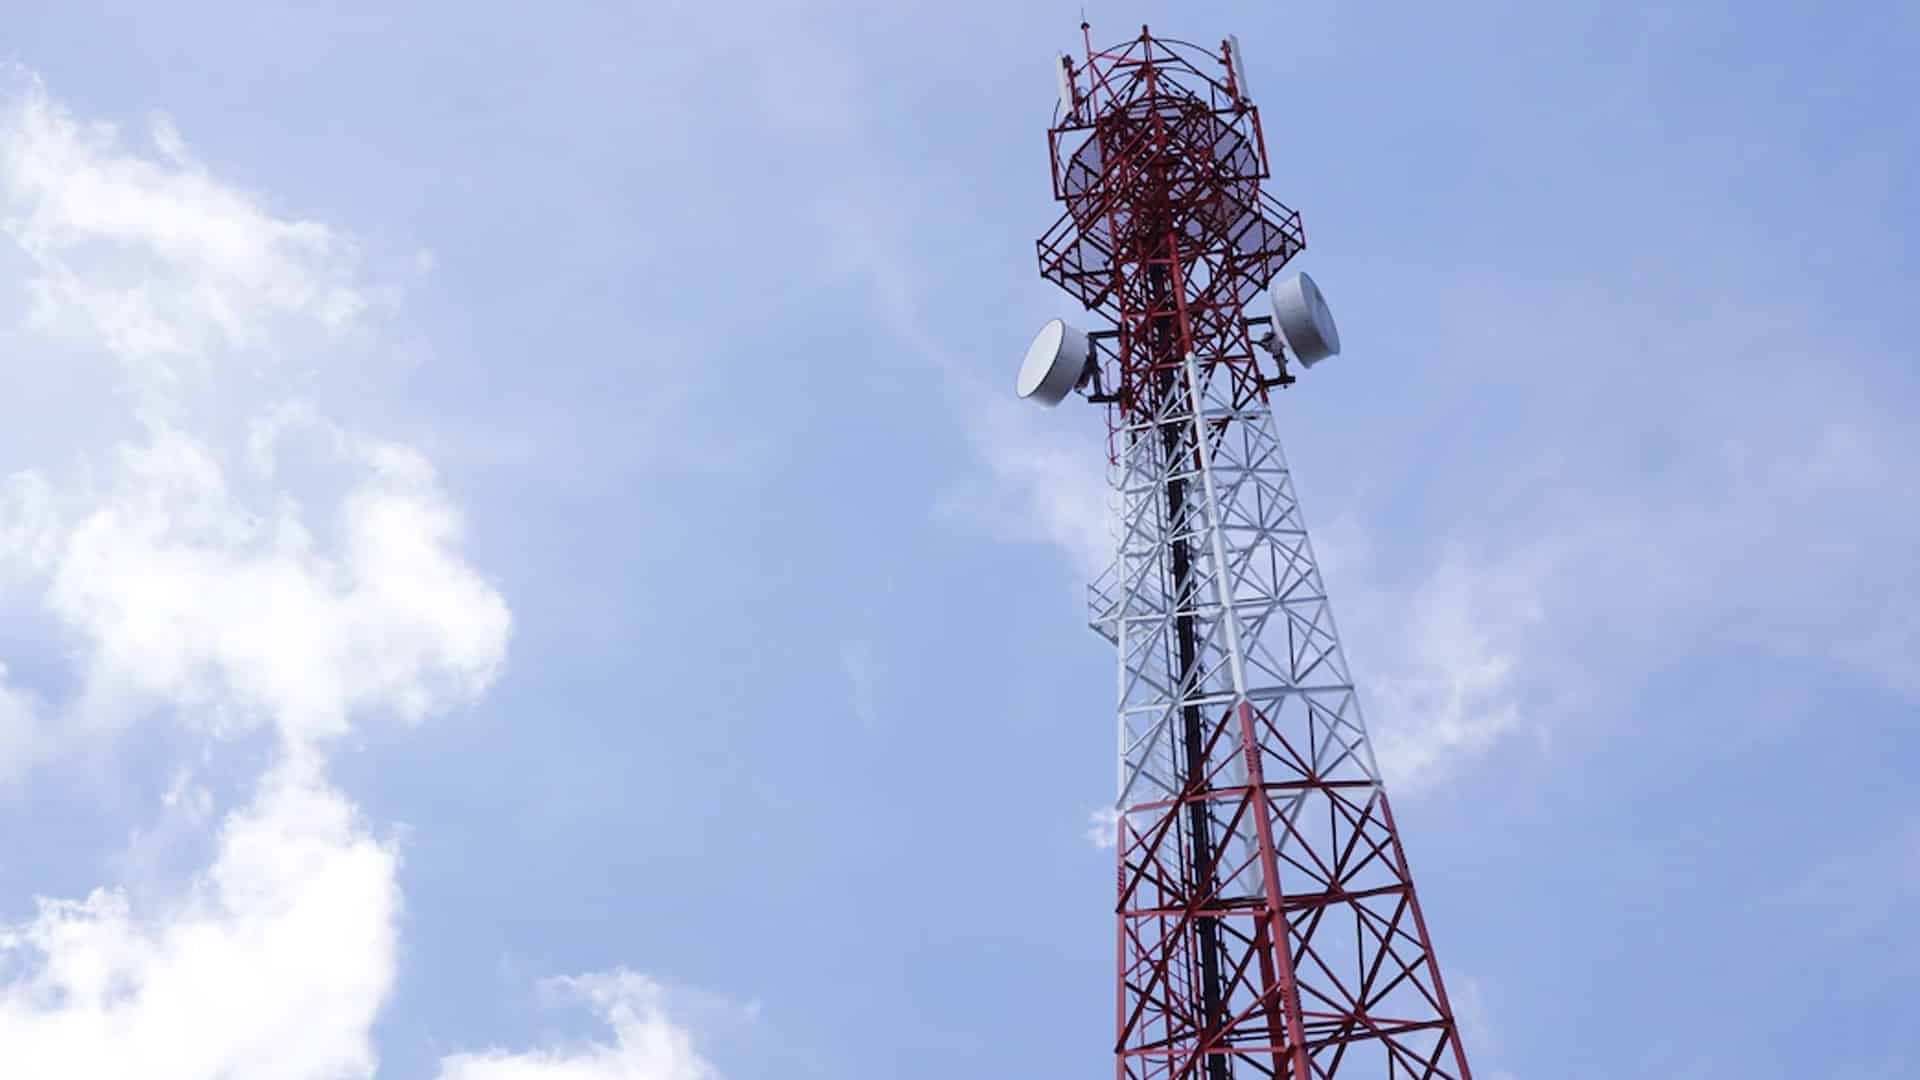 Adani Data Networks, Jio, Airtel, Vodafone Idea to bid for spectrum